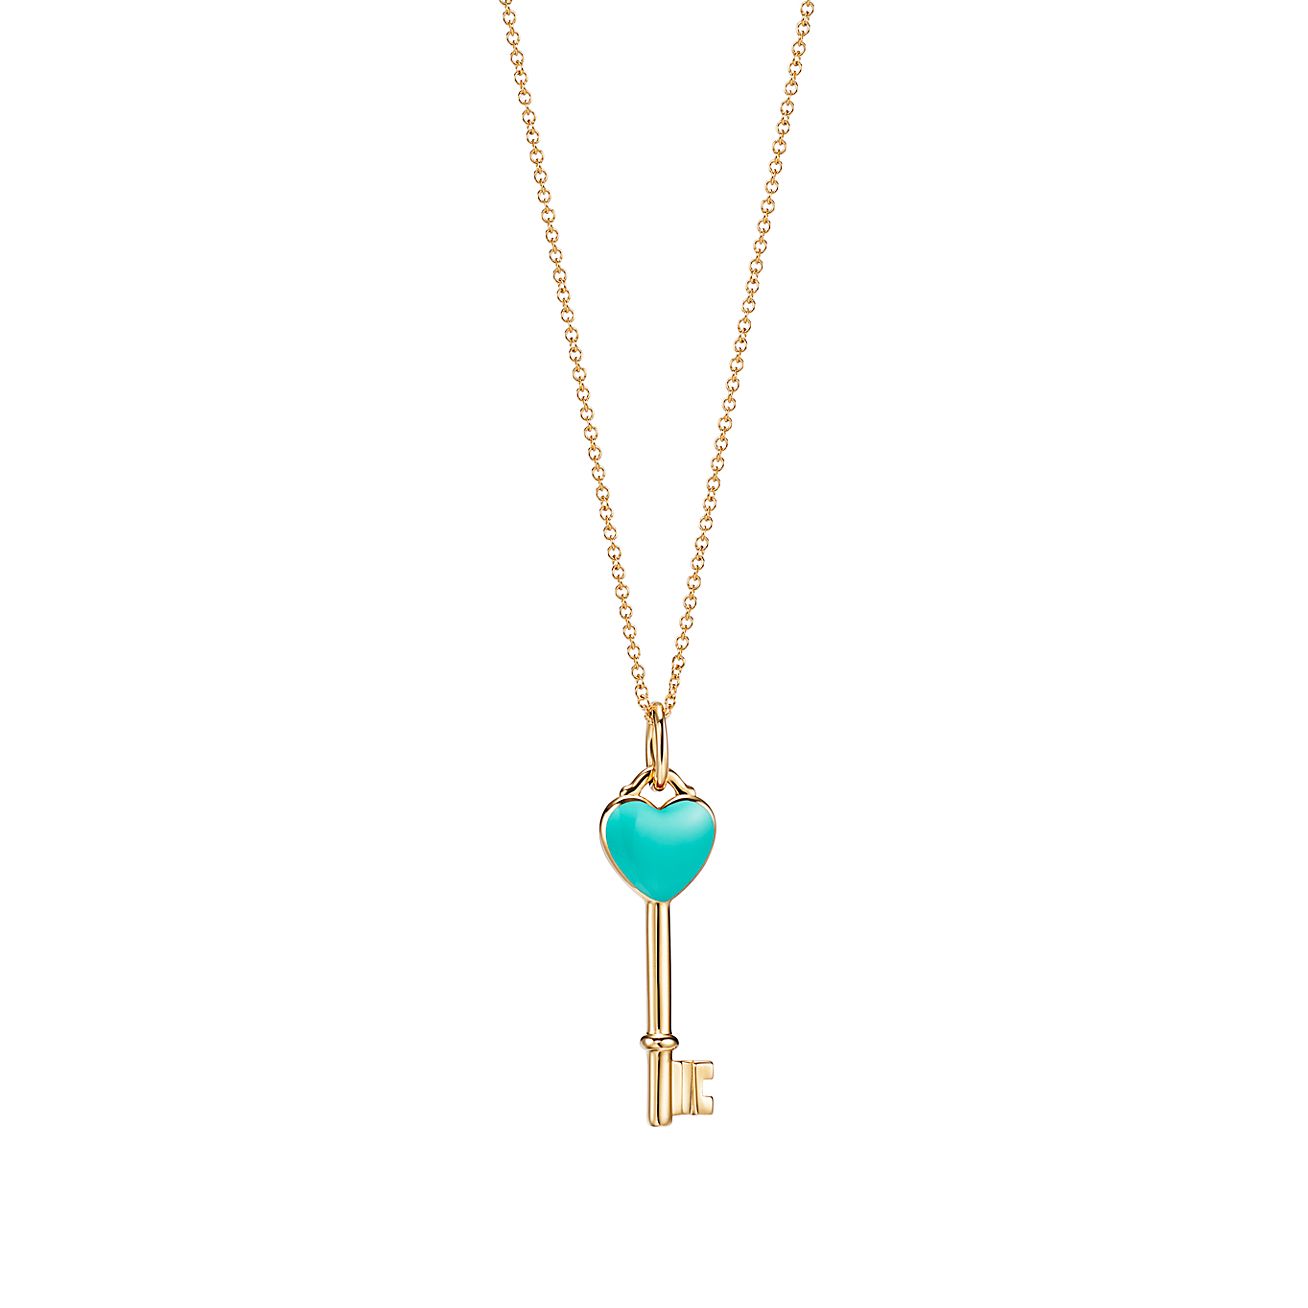 tiffany blue key necklace